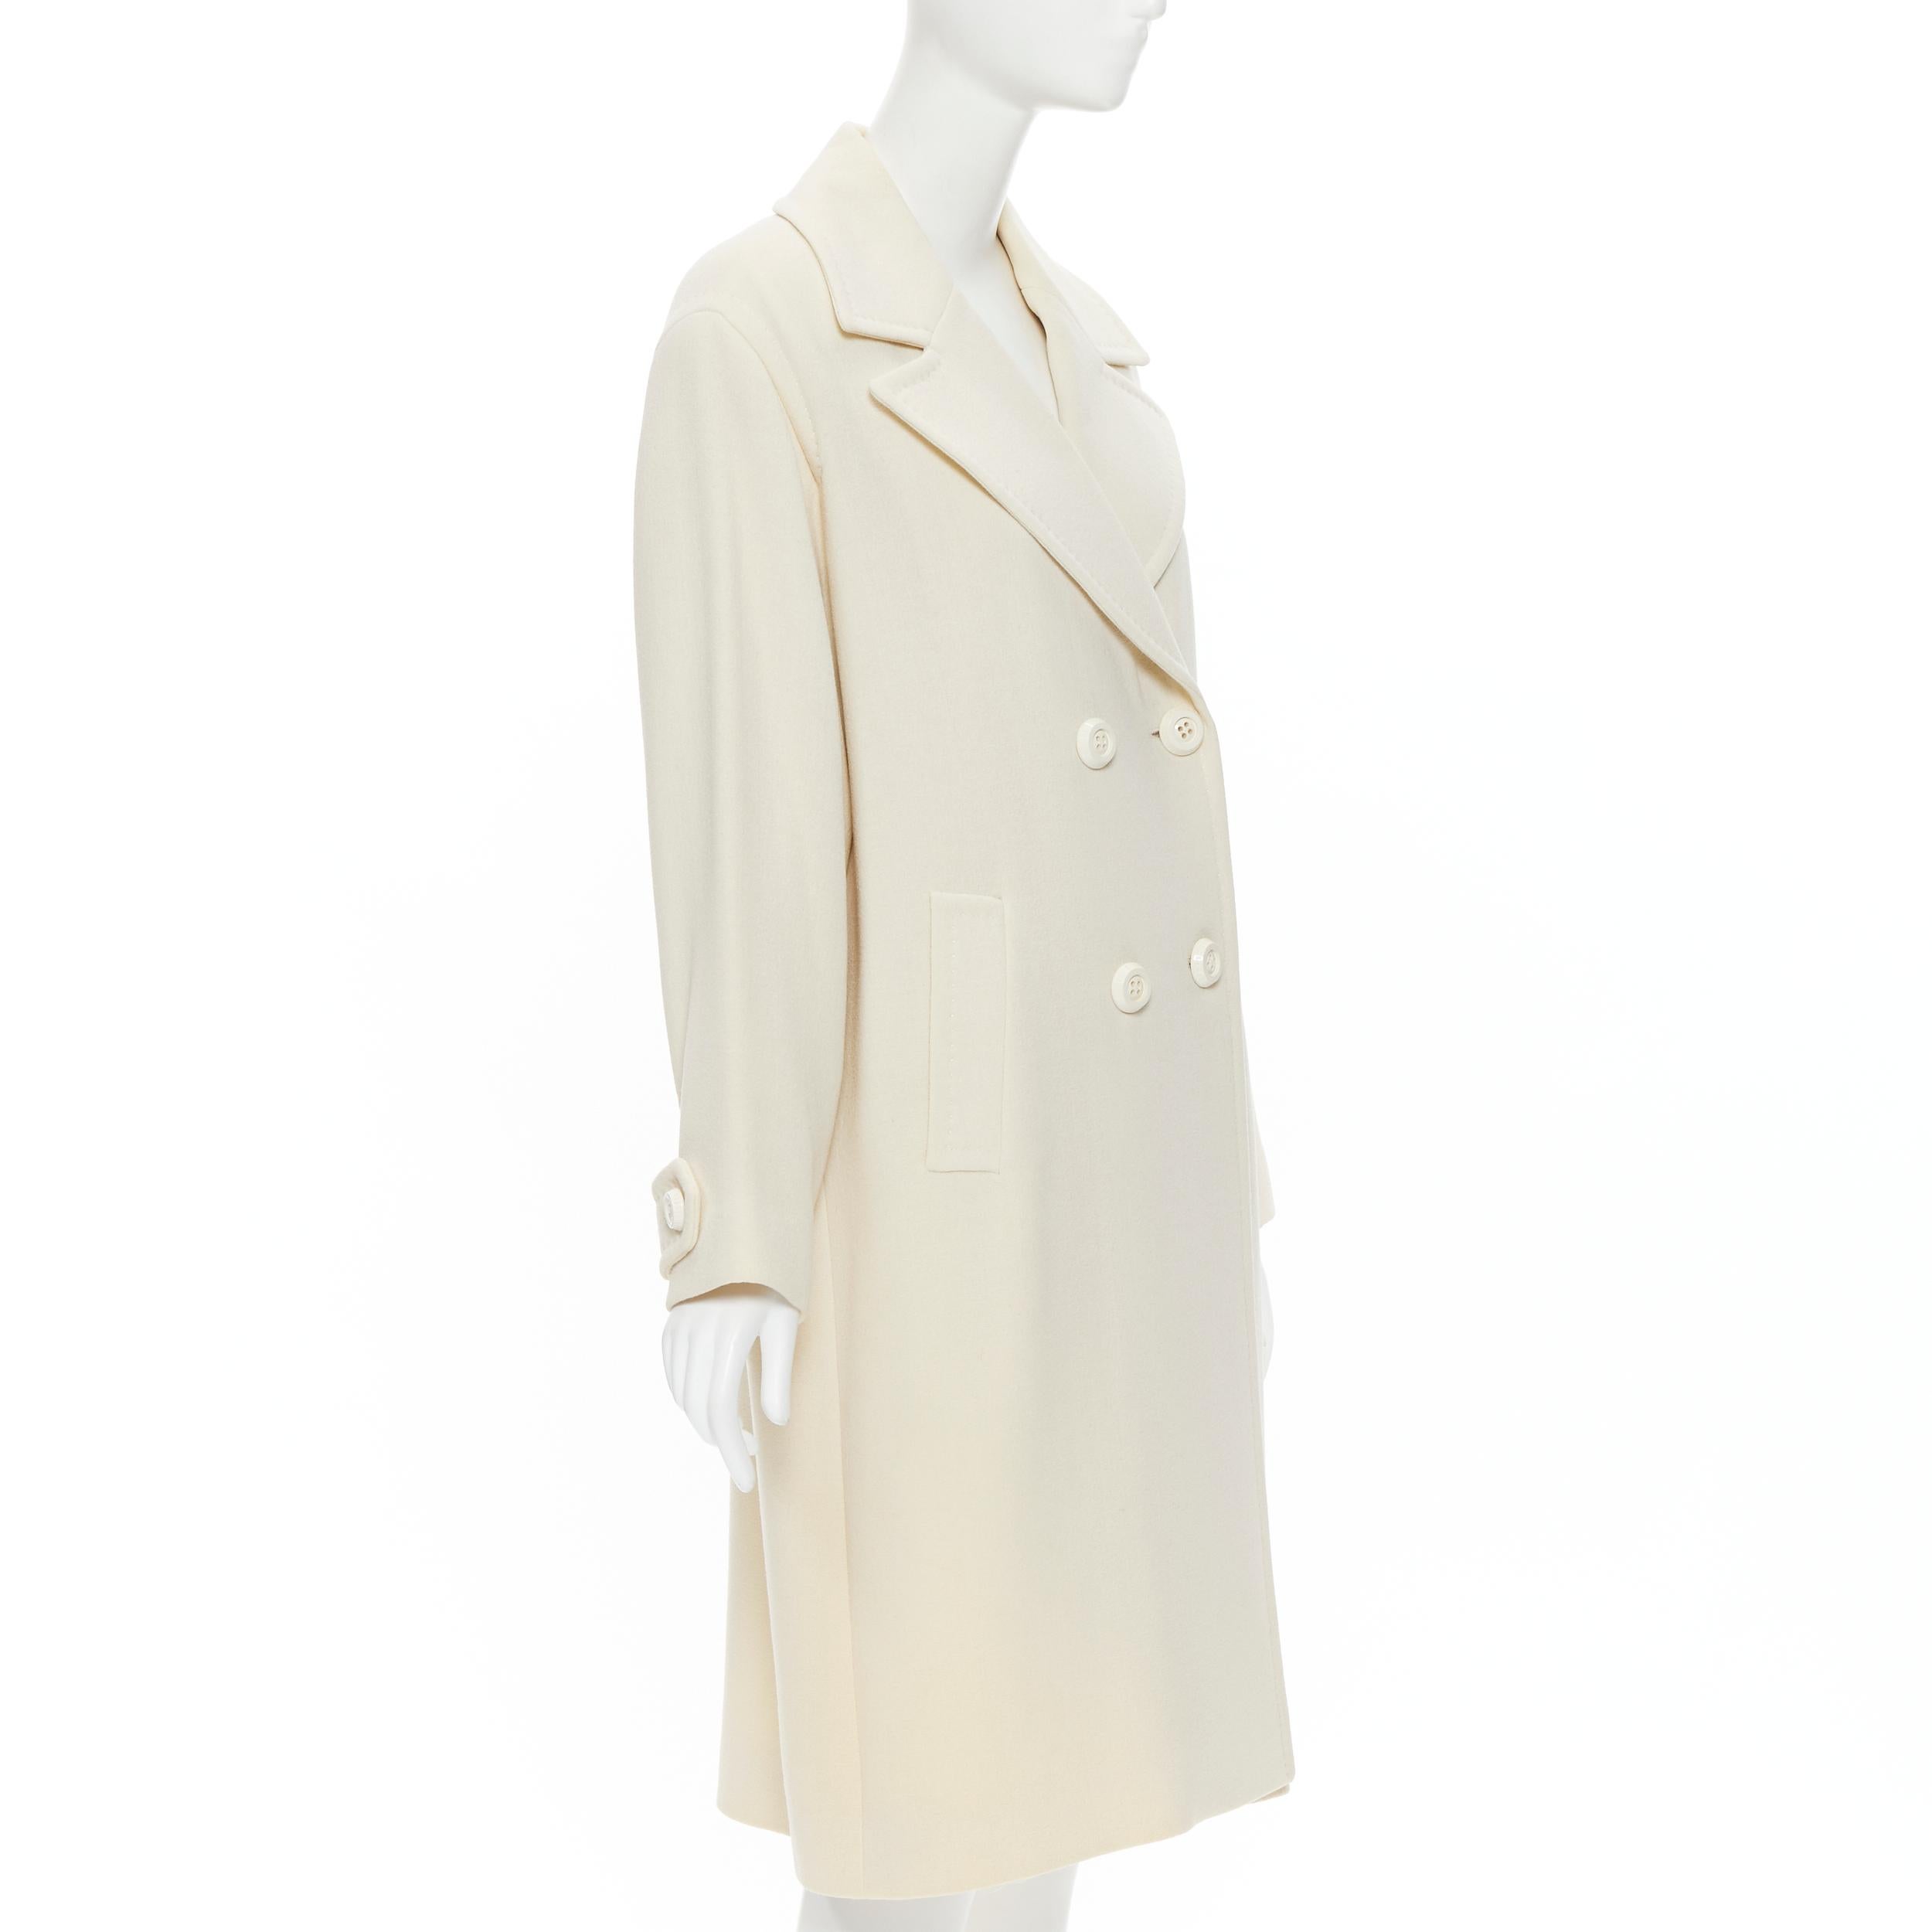 Beige GIANFRANCO FERRE STUDIO ivory wool crepe double breasted coat jacket IT42 M